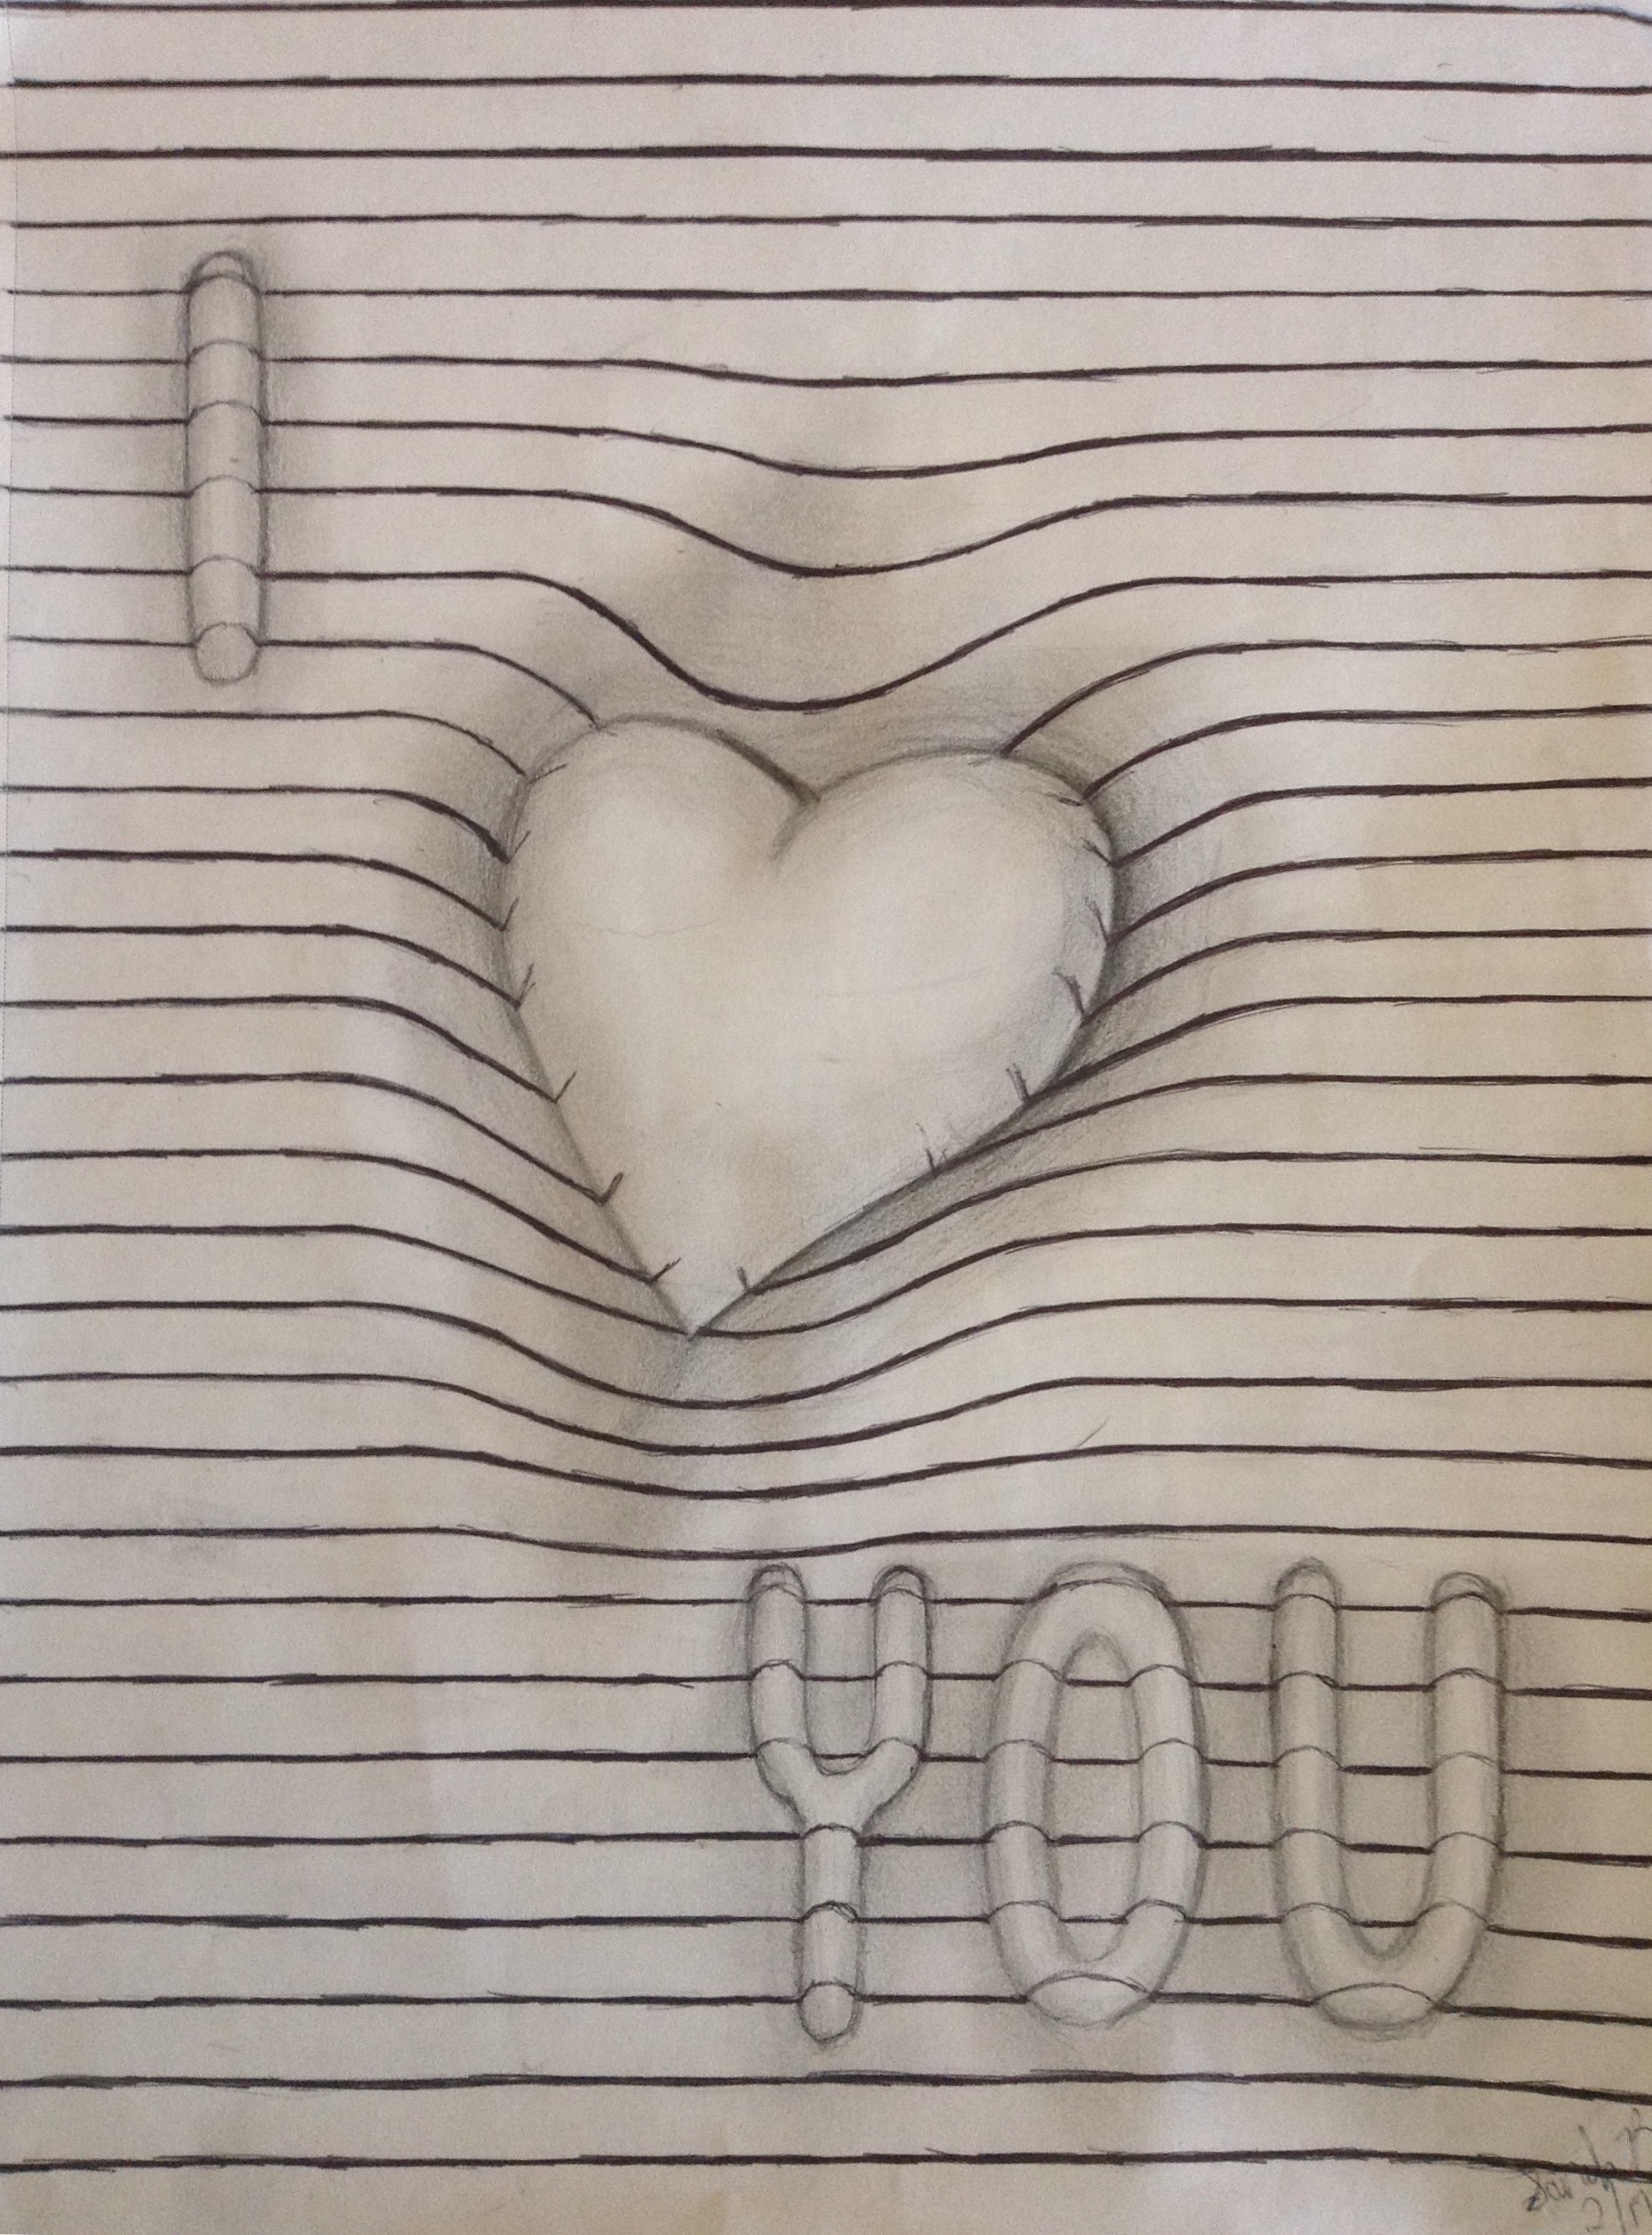 10 Easy Valentine's Day Doodles - Amy Latta Creations